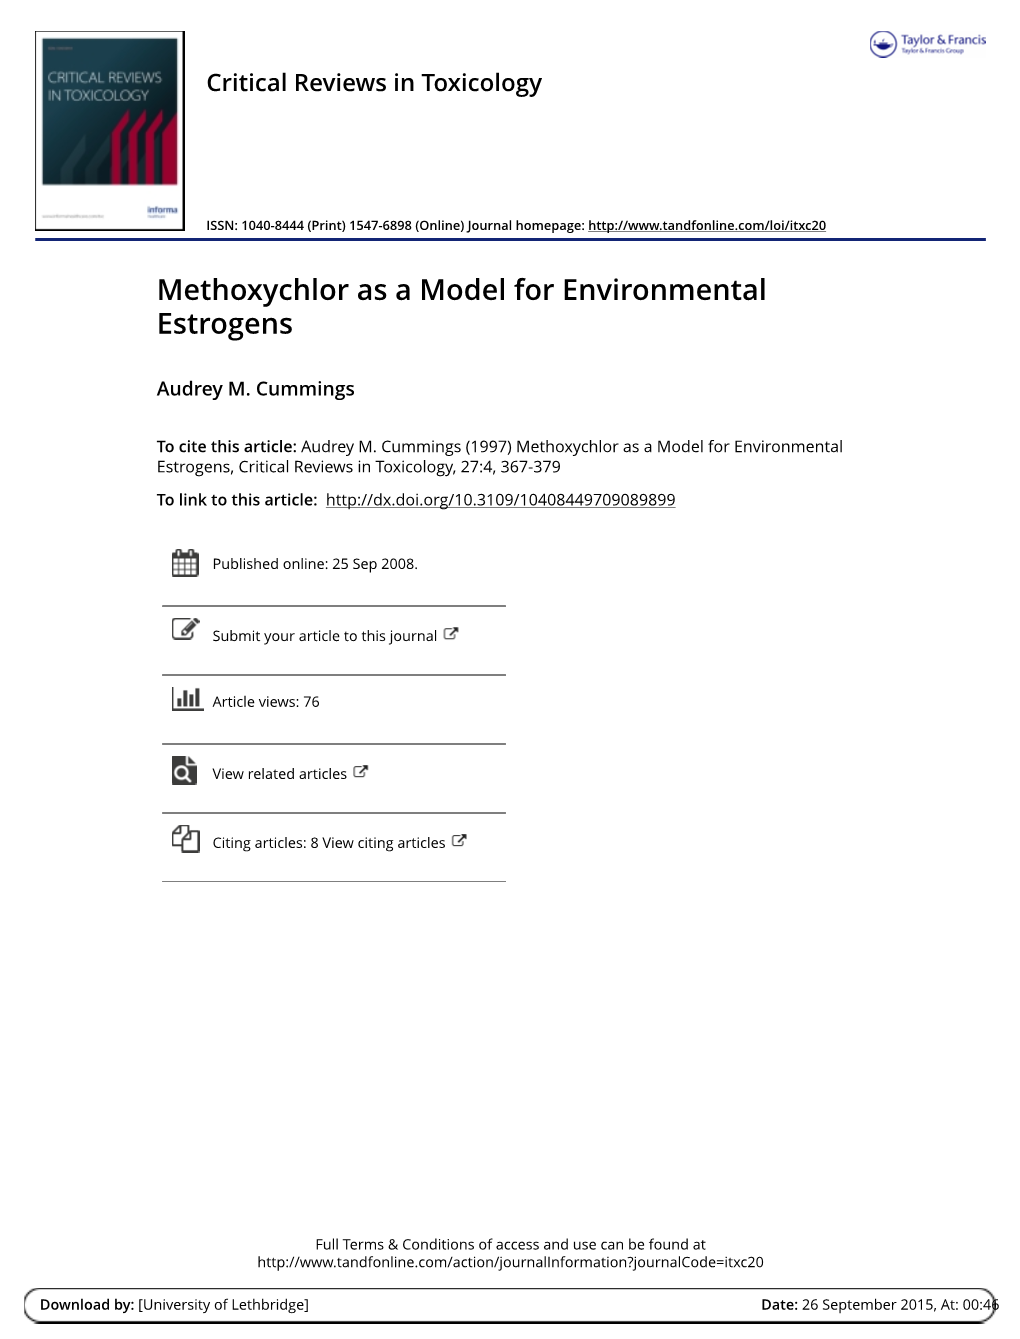 Methoxychlor As a Model for Environmental Estrogens